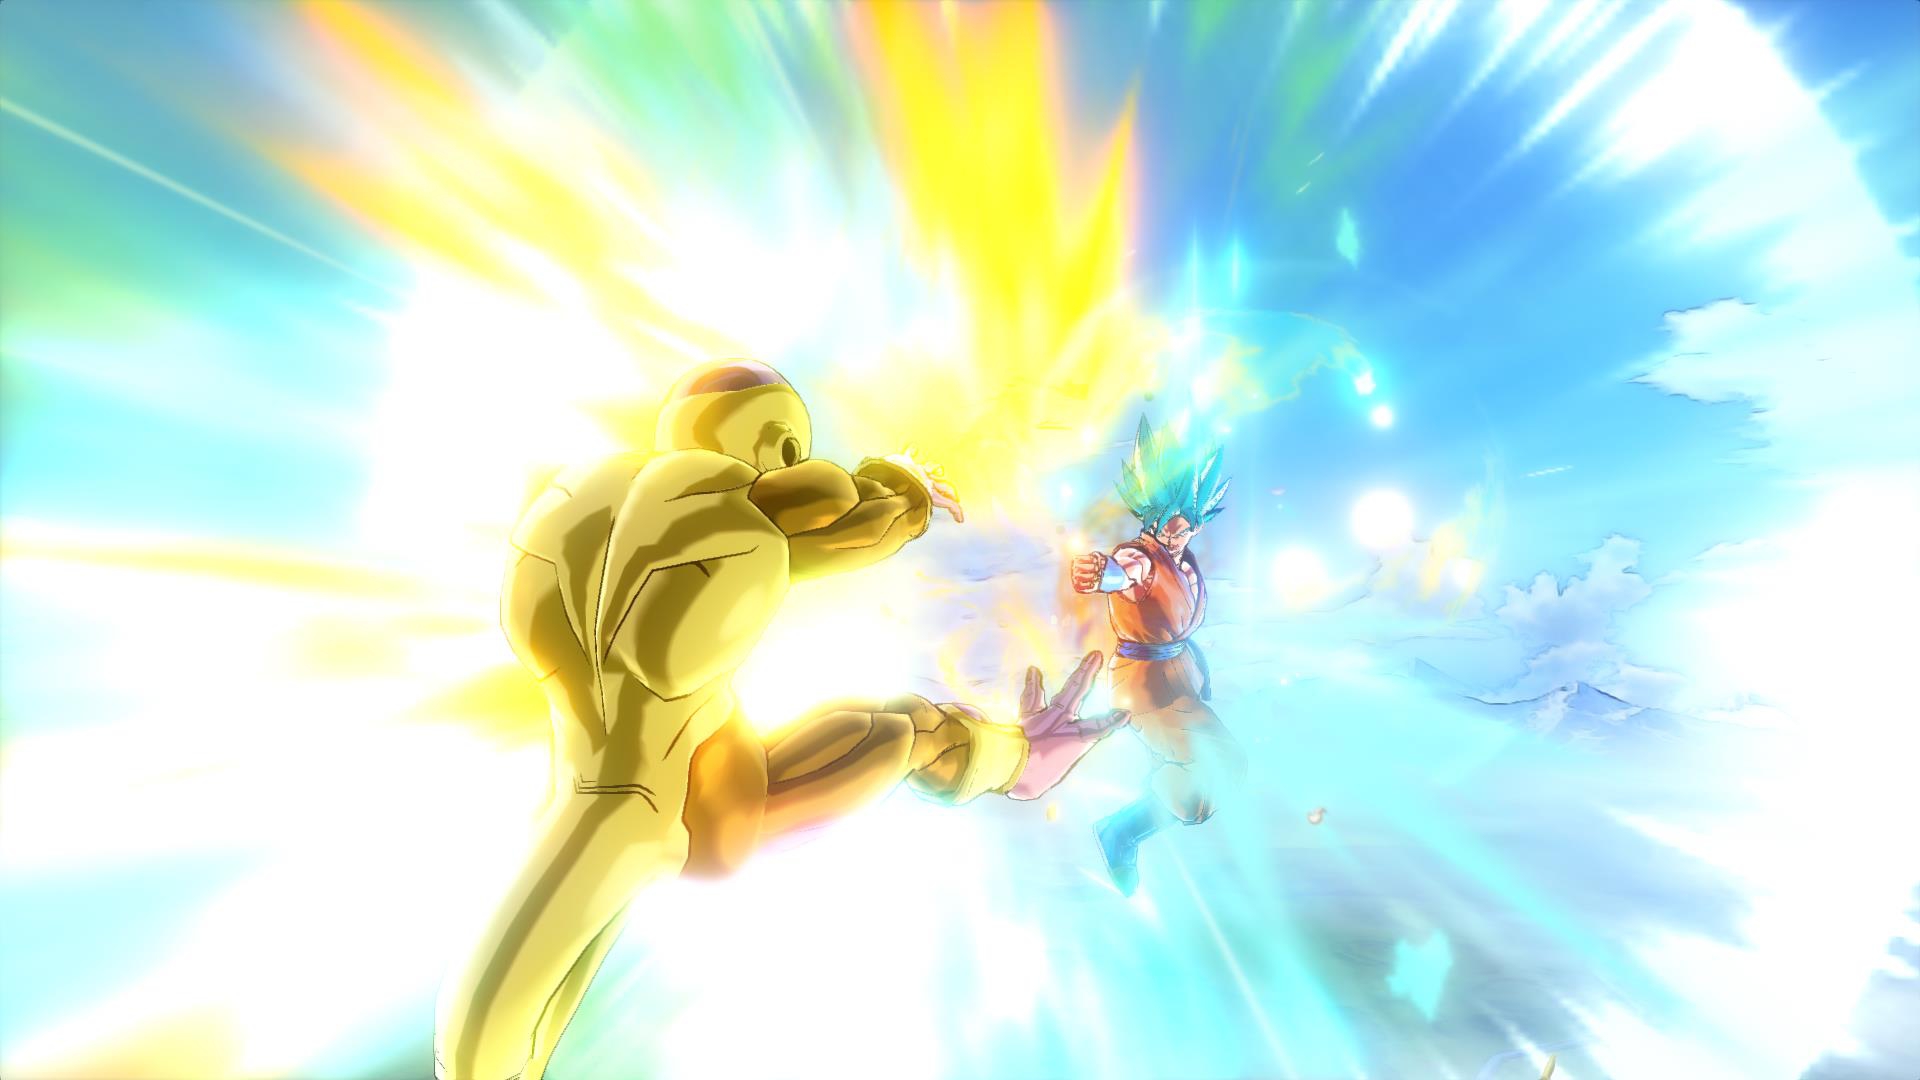 Super Saiyan God Super Saiyan Goku and Vegeta DLC for Dragon Ball Xenoverse  coming soon - Neoseeker